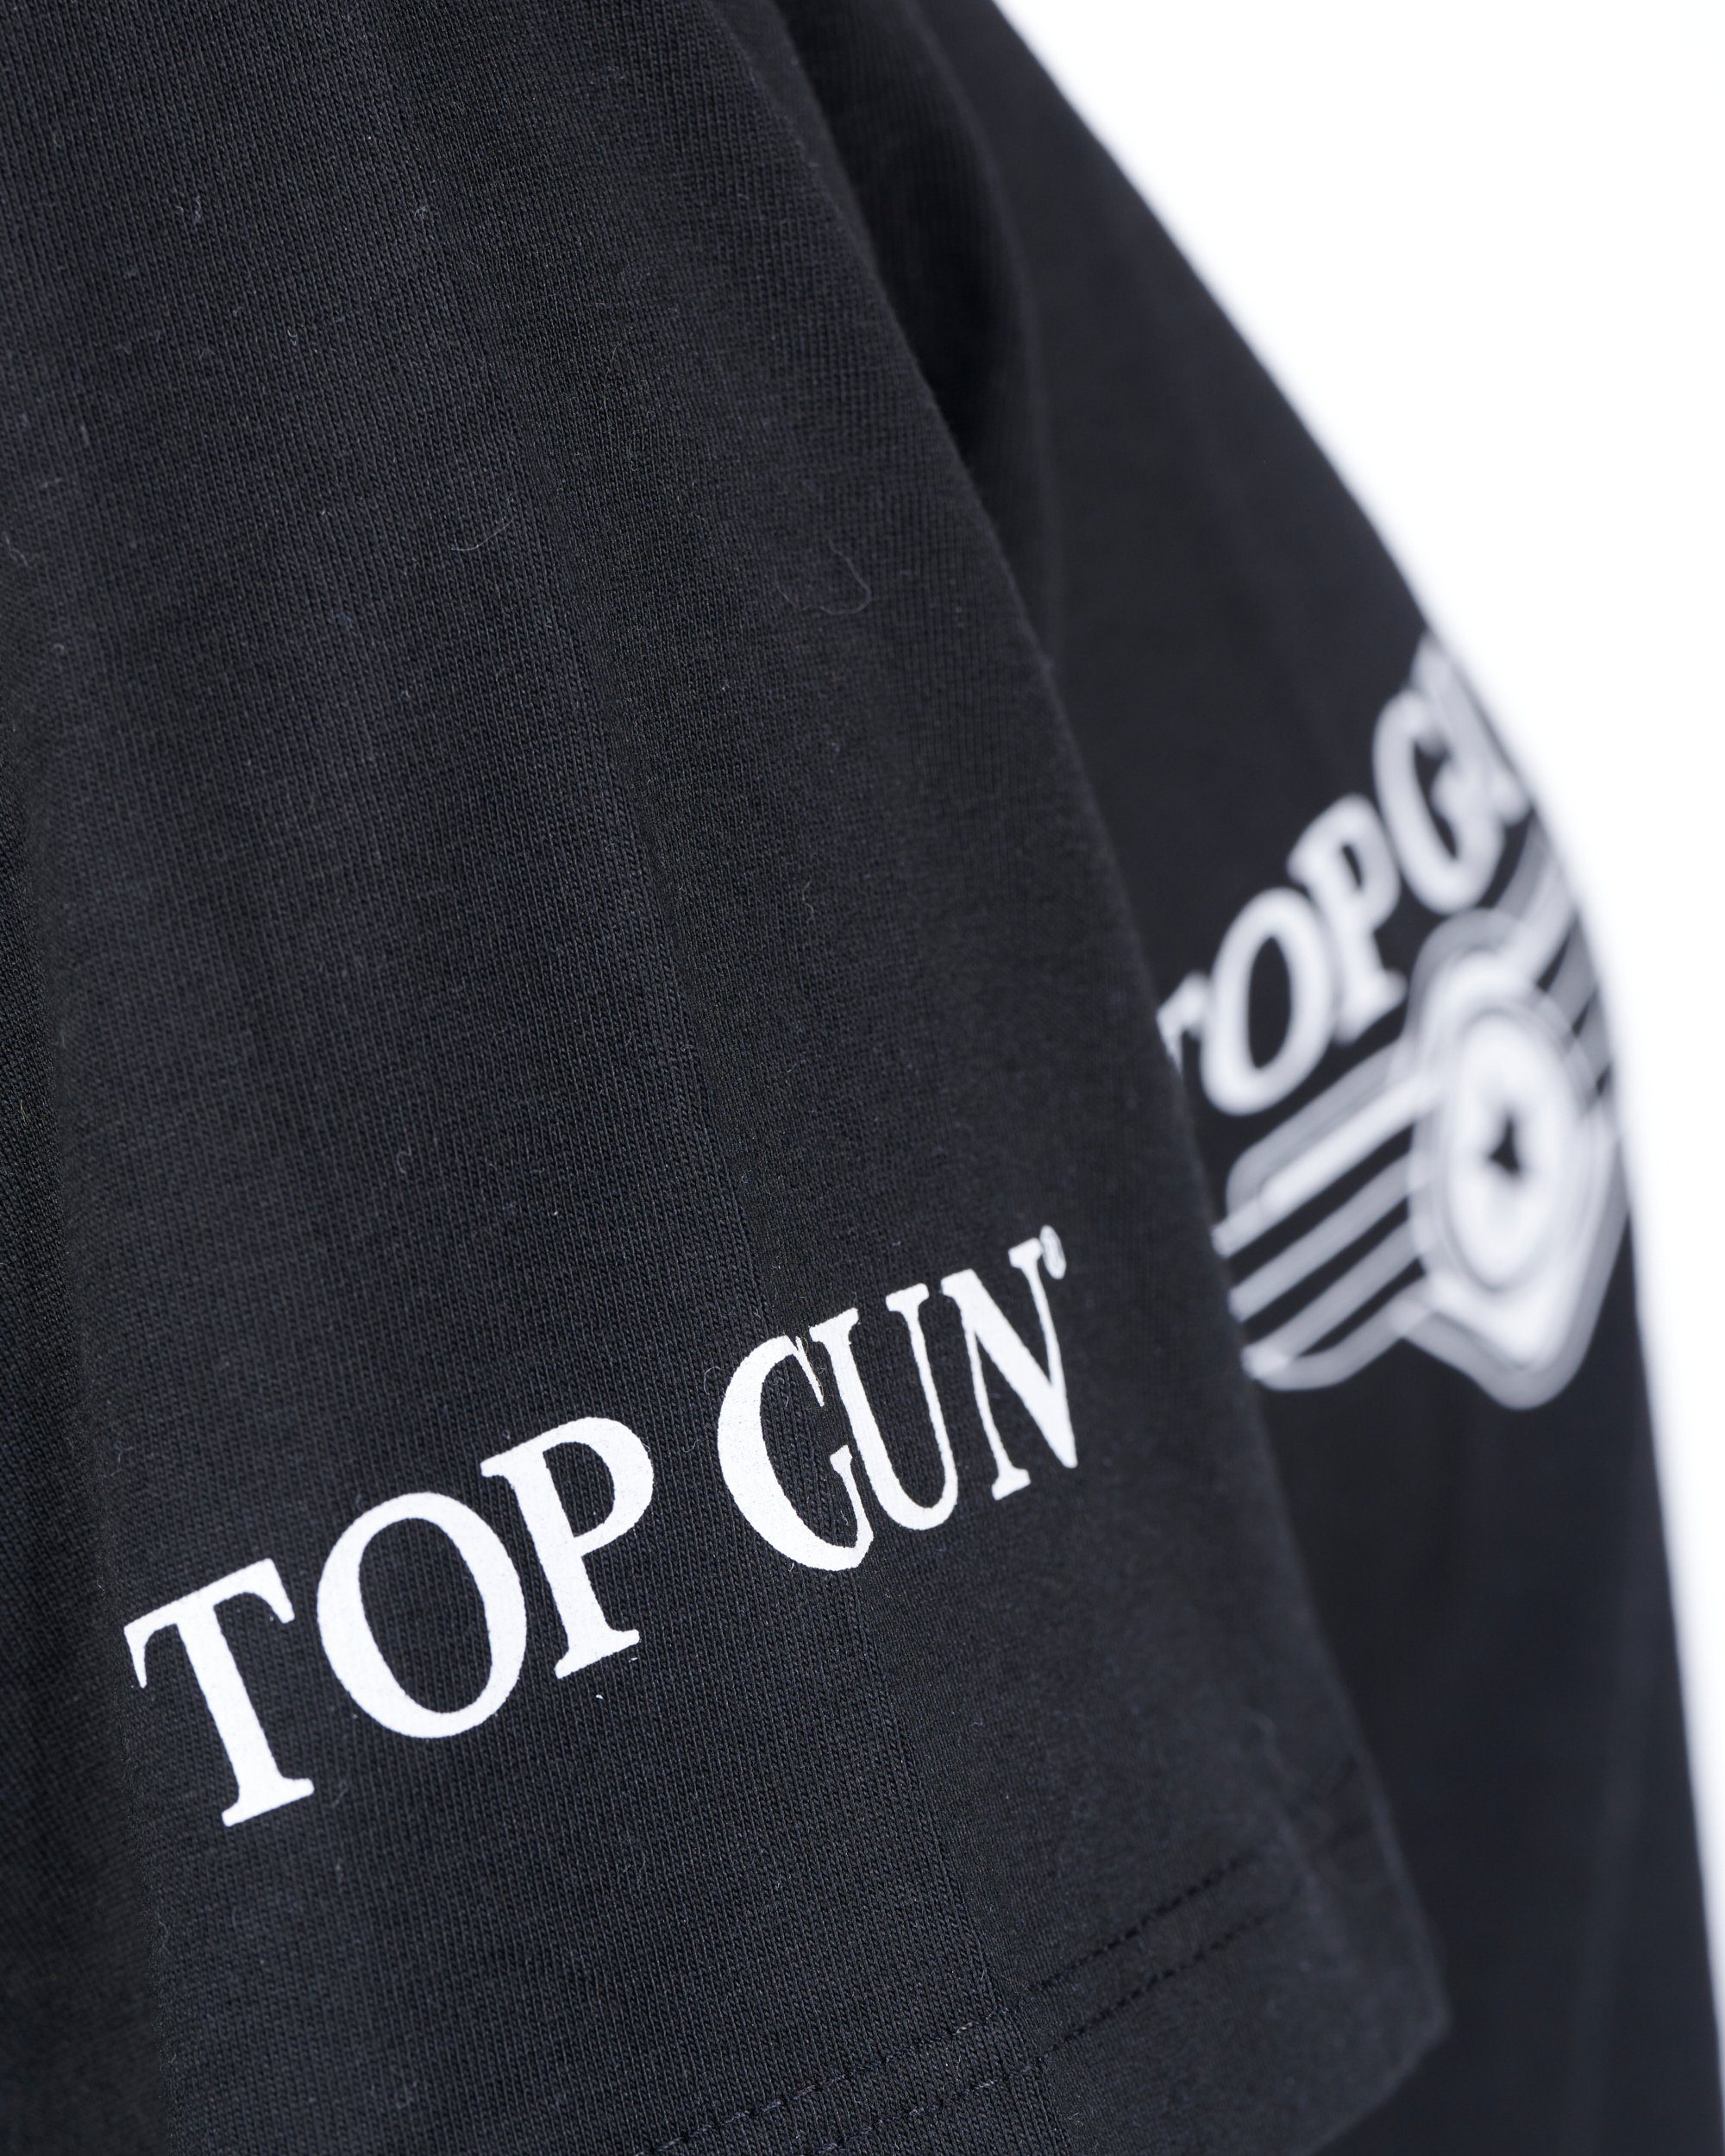 TOP GUN T-Shirt NB20119 black